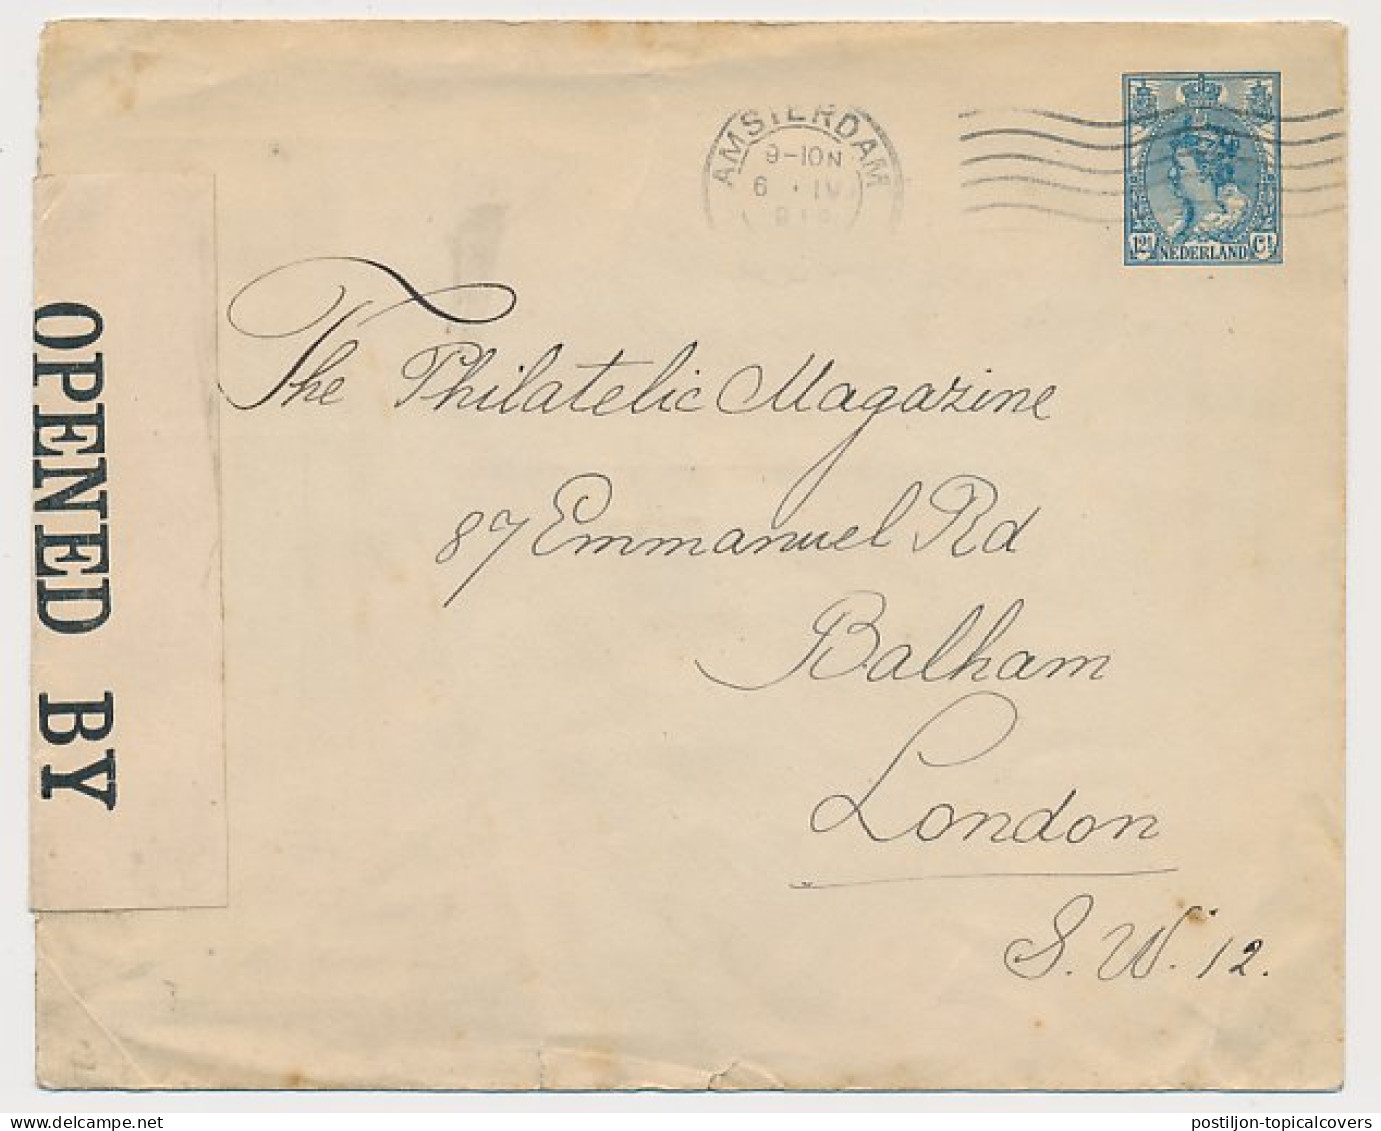 Envelop G. 19 Particulier Bedrukt Amsterdam - GB / UK 191. - Ganzsachen